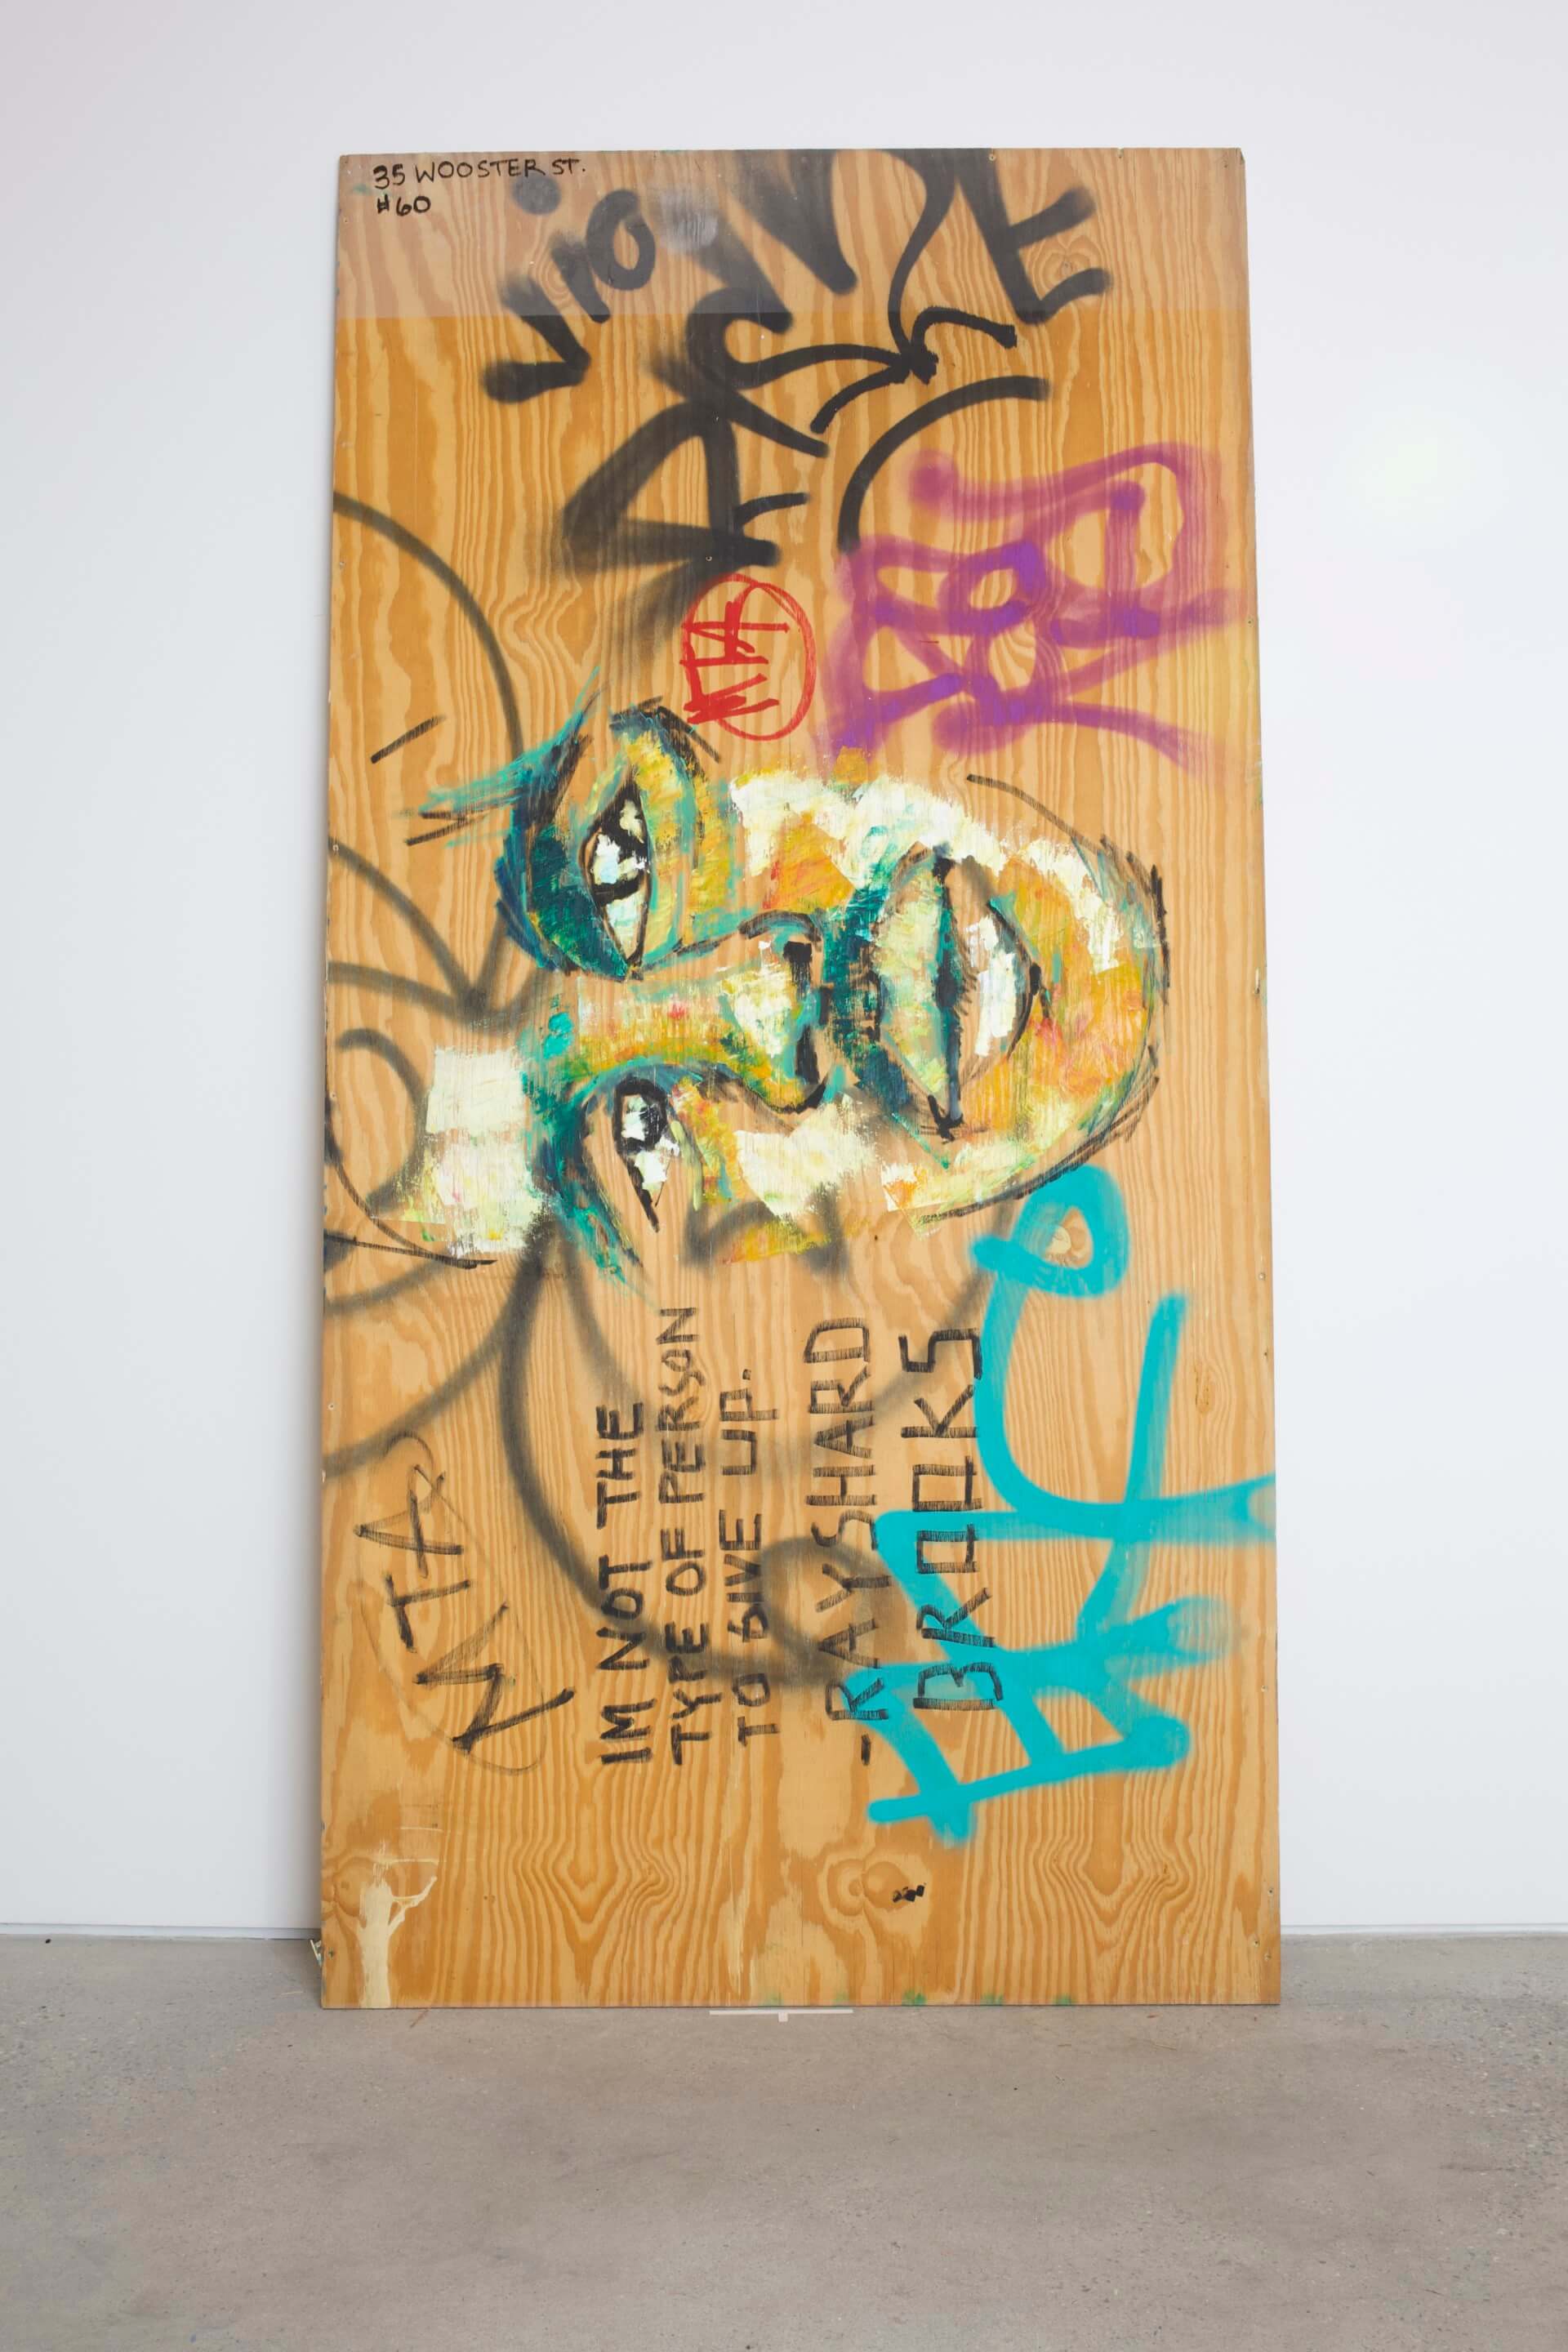 a graffiti-covered plywood board